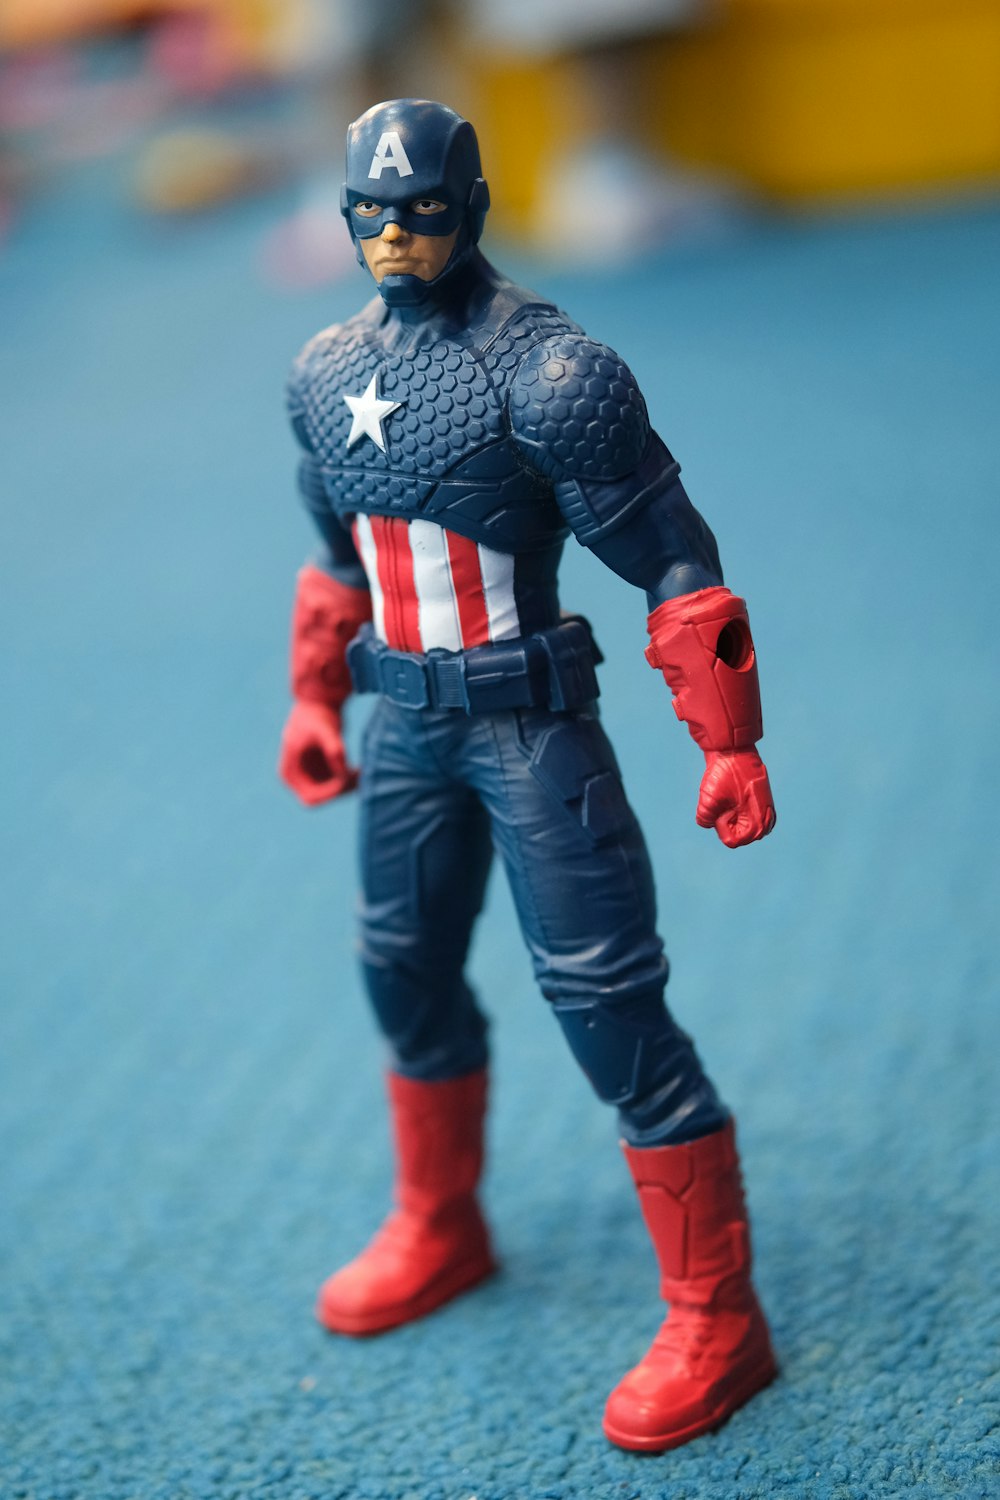 Captain America toy